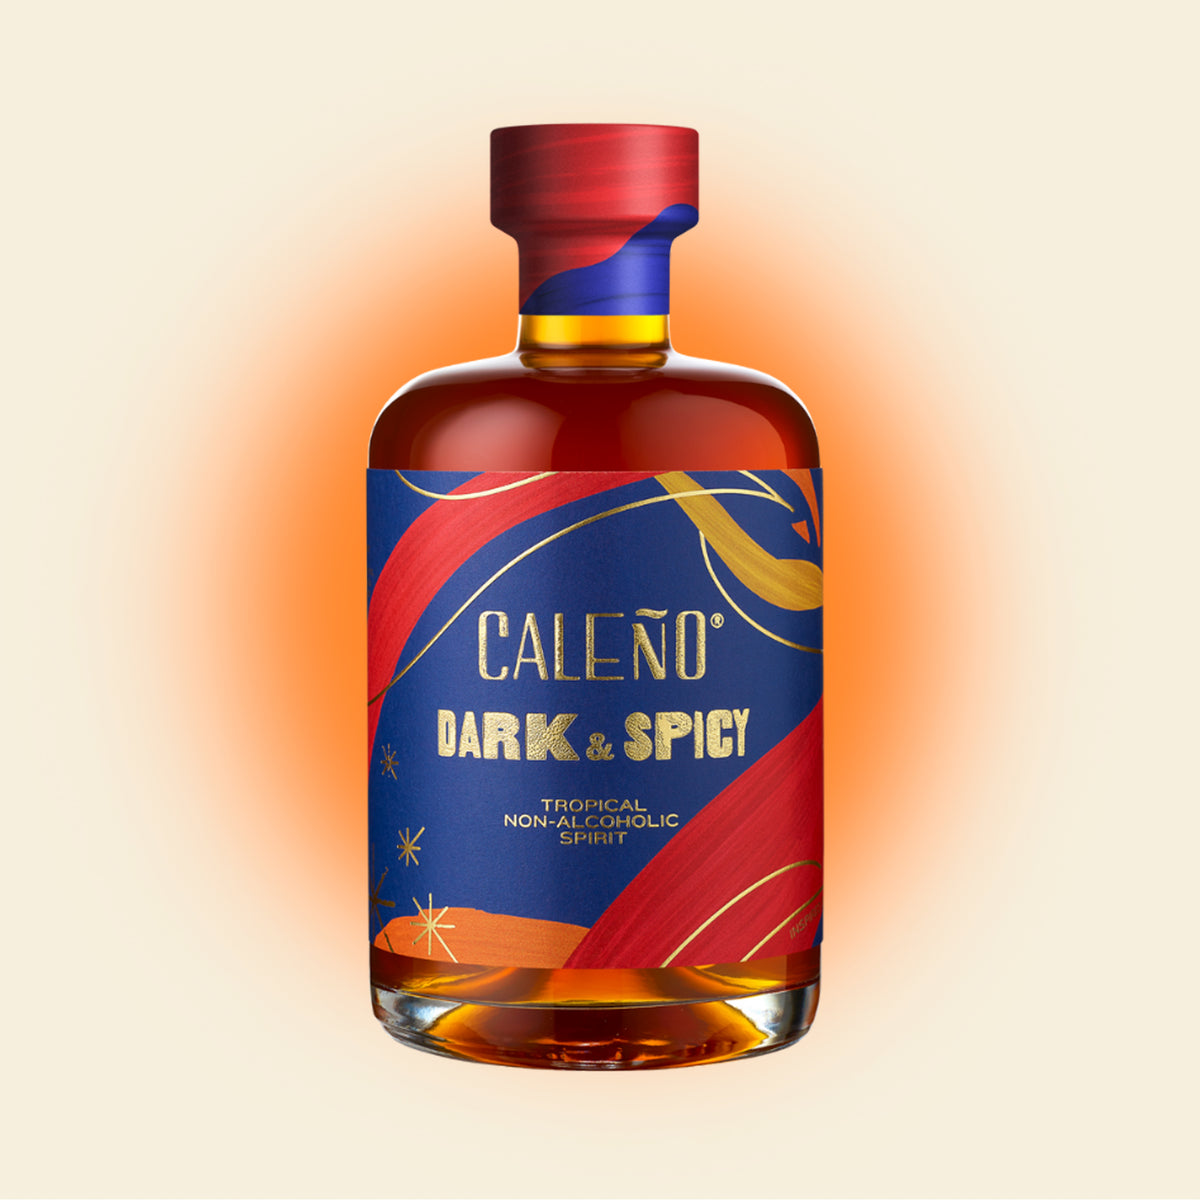 Caleno Dark and Spicy Nonalcoholic Spirit